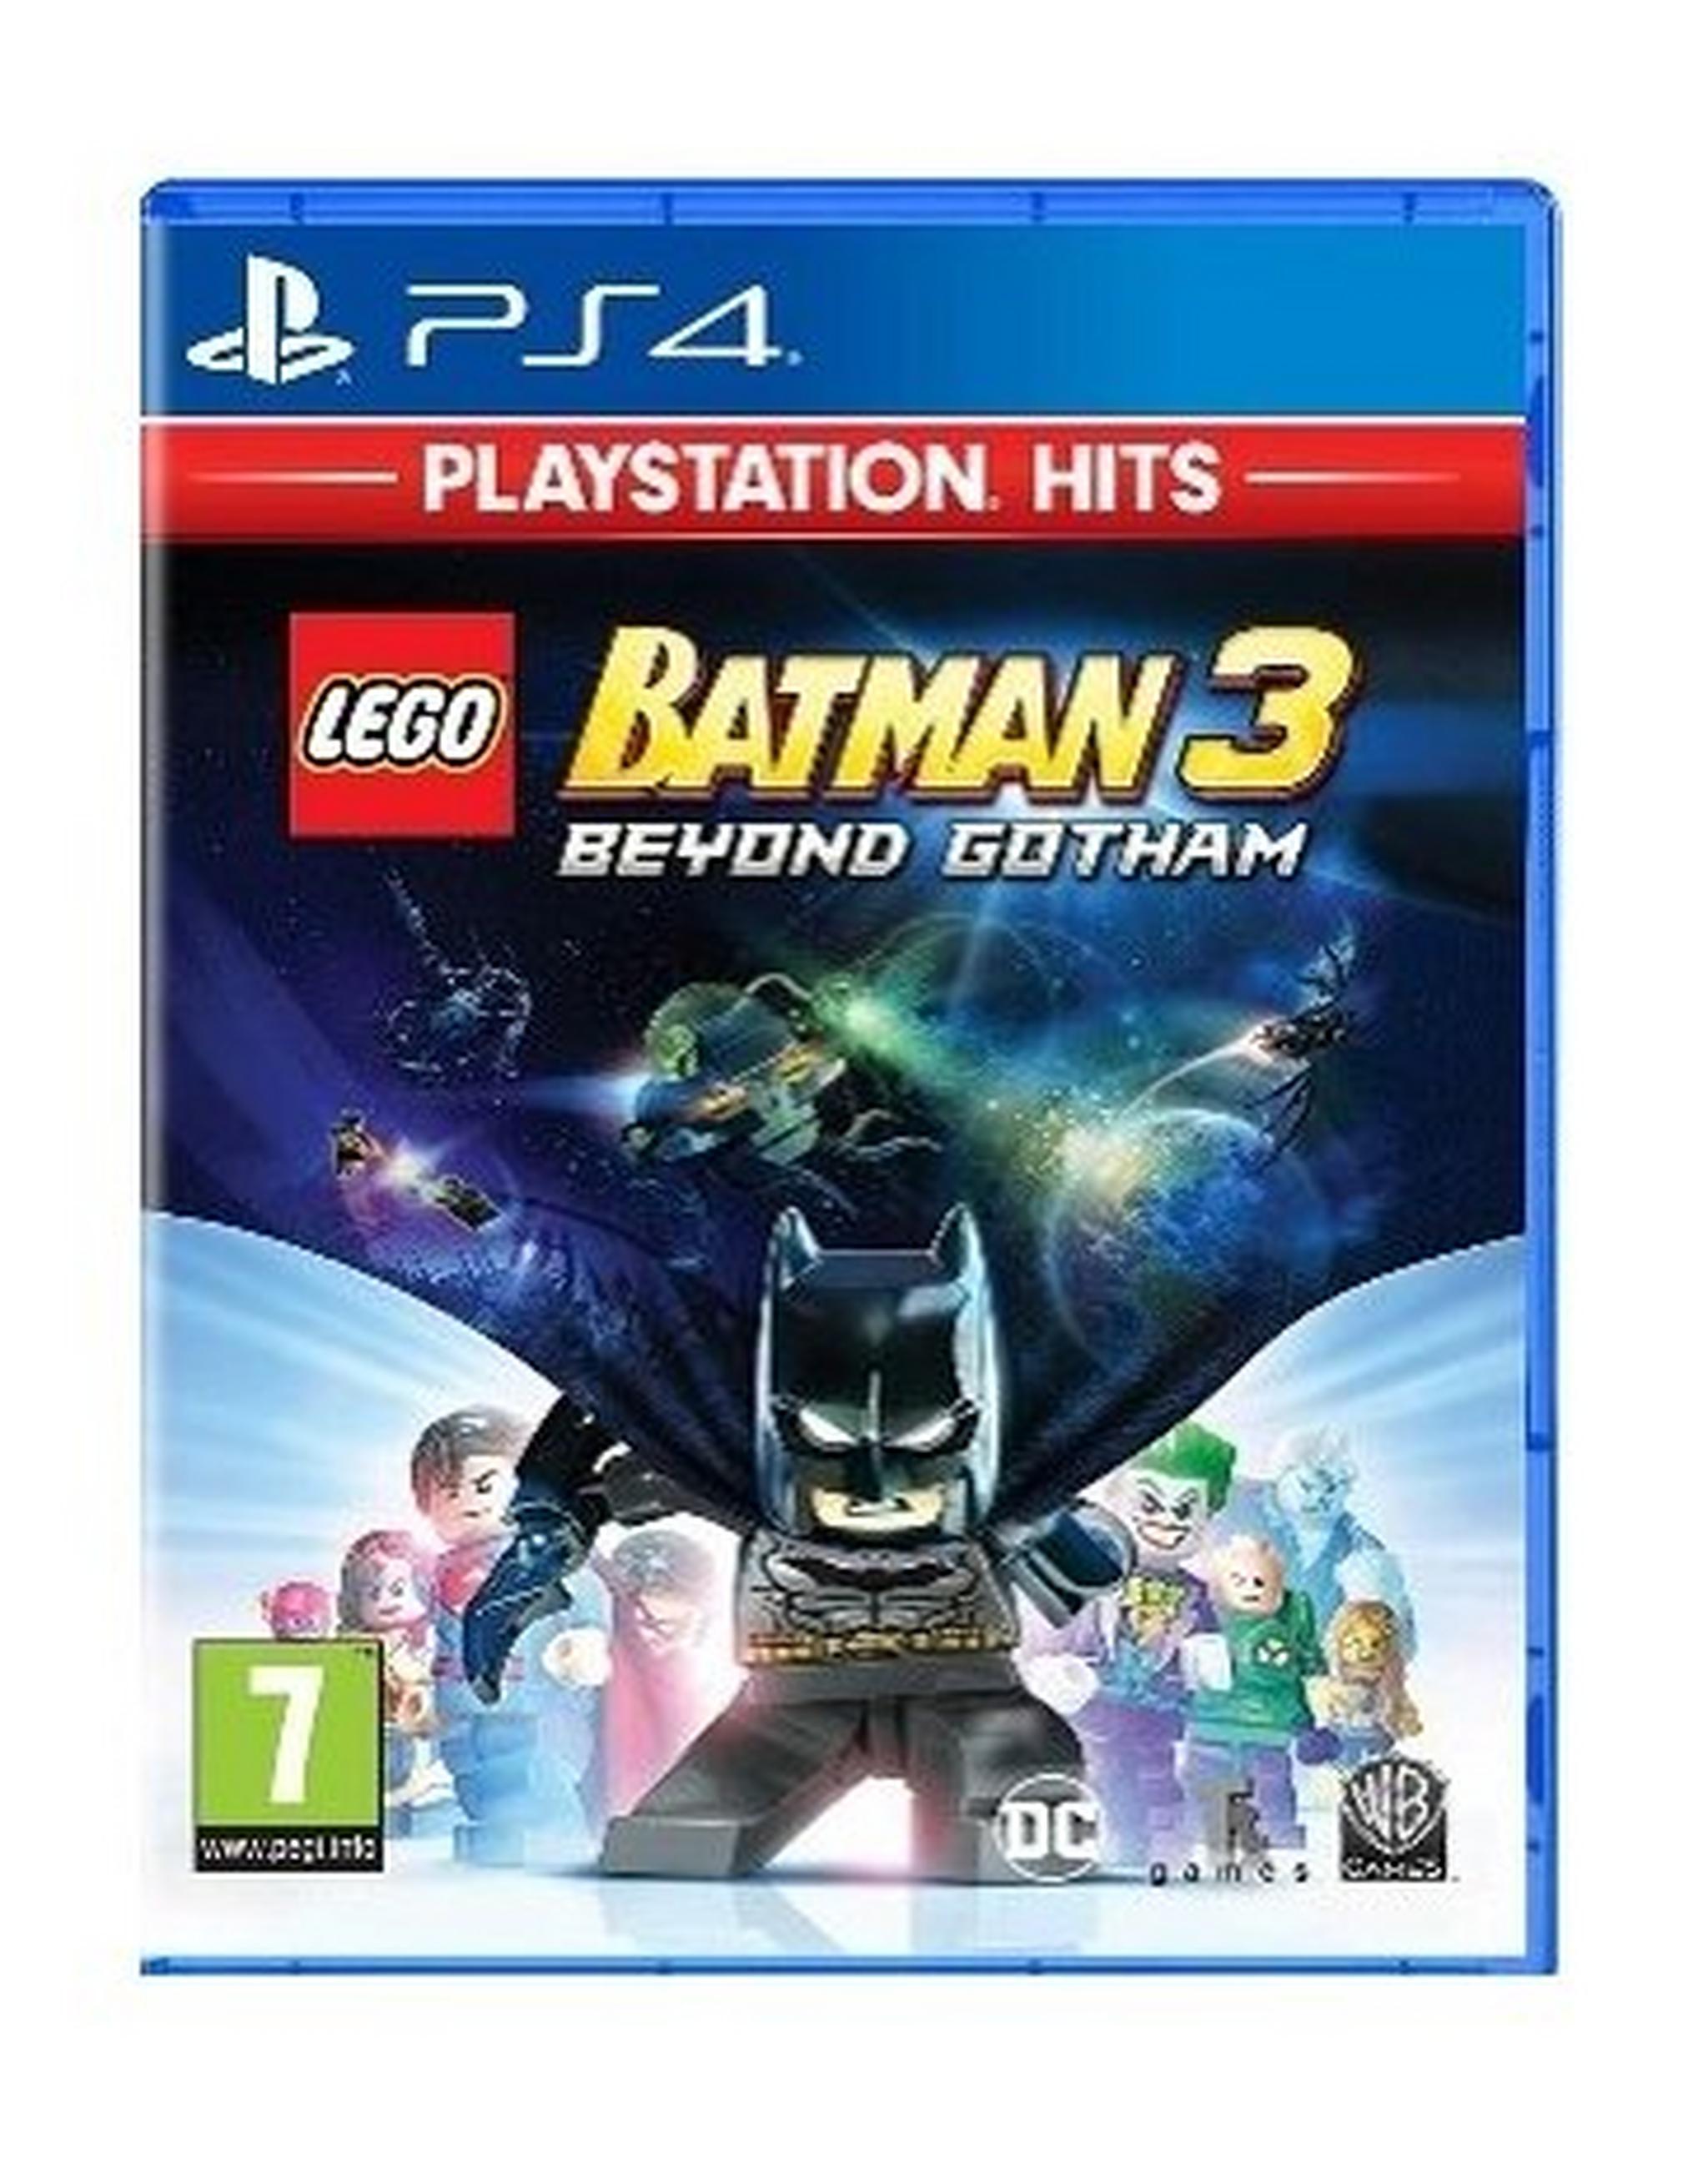 Lego Batman 3 Hits - Playstation 4 Game